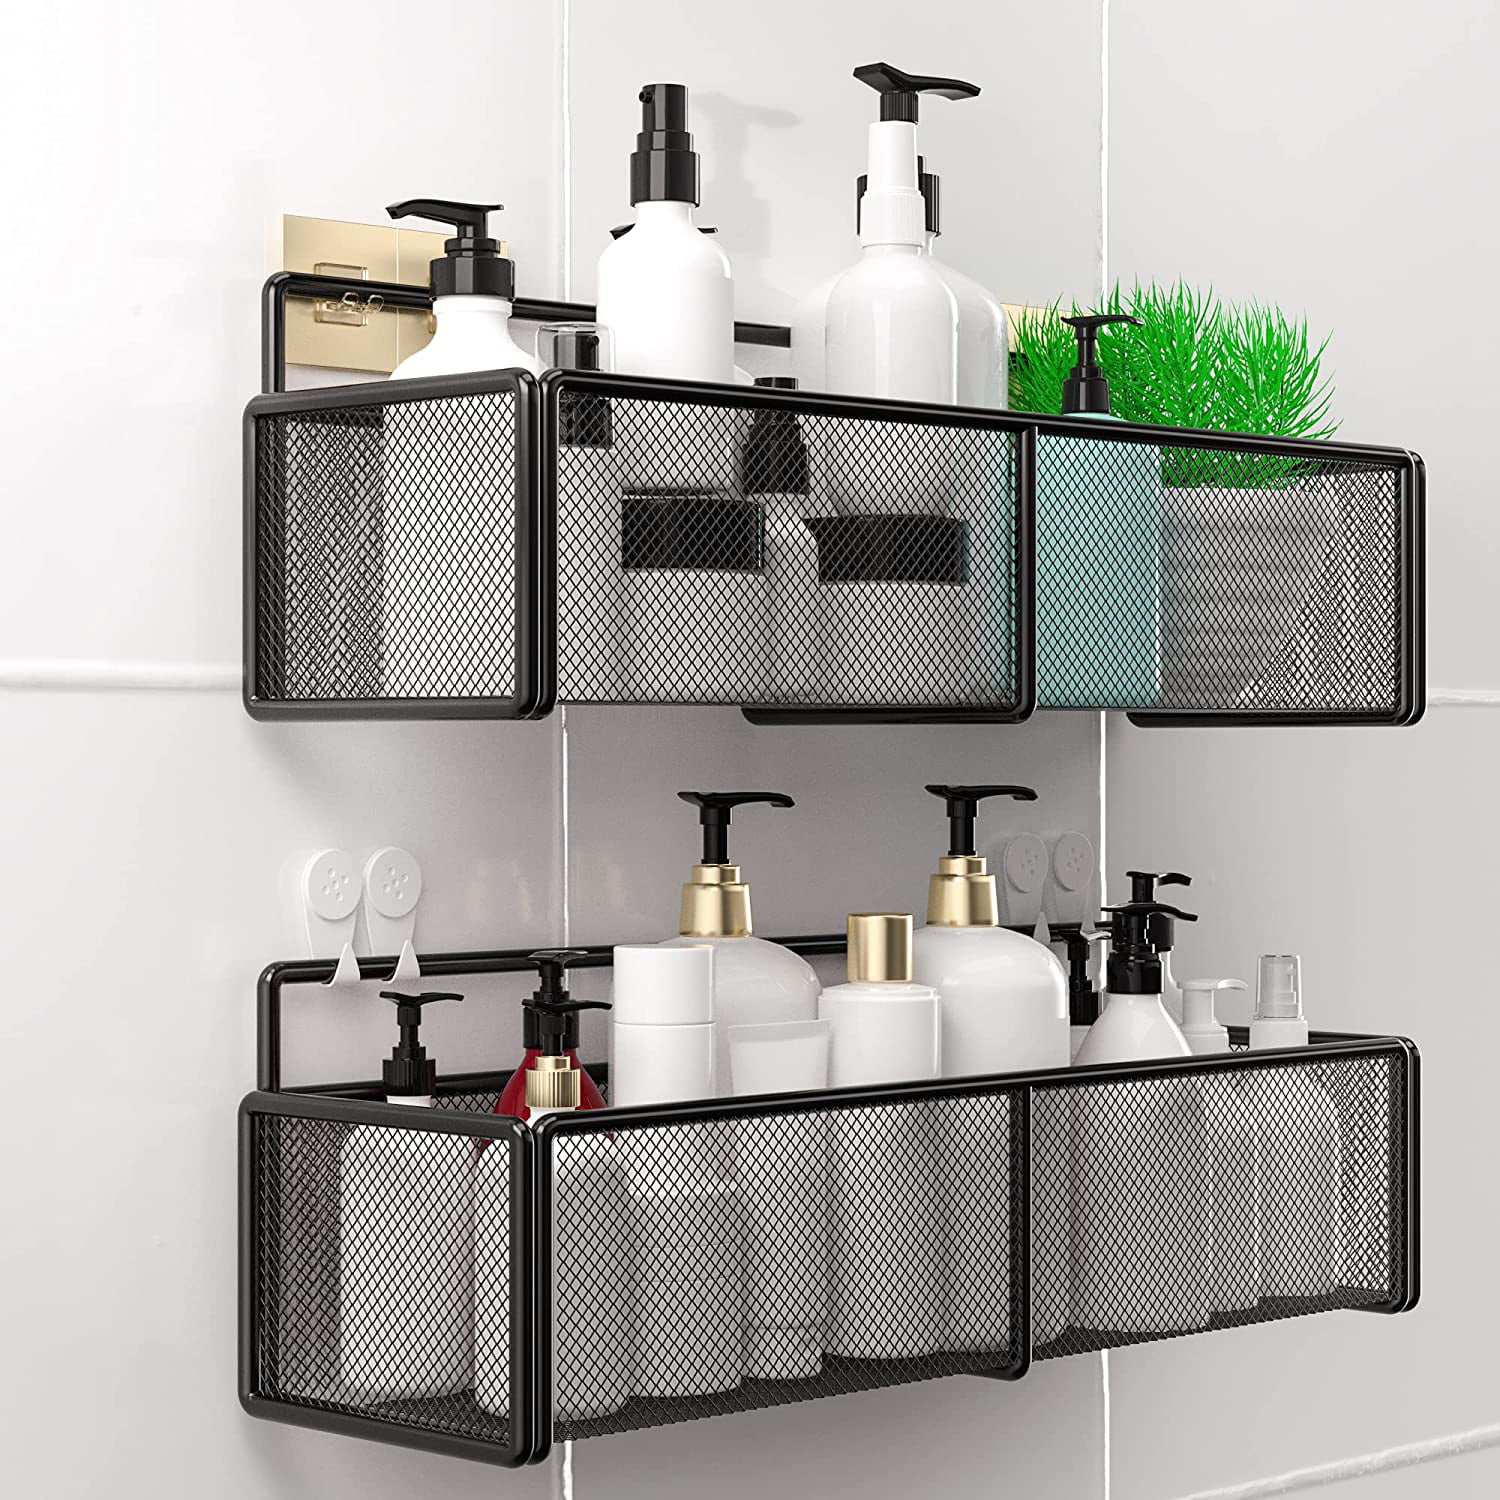 Mounted Adhesive Kitchen Shampoo Holder Storage Rack Bathroom Organizers Shelf 